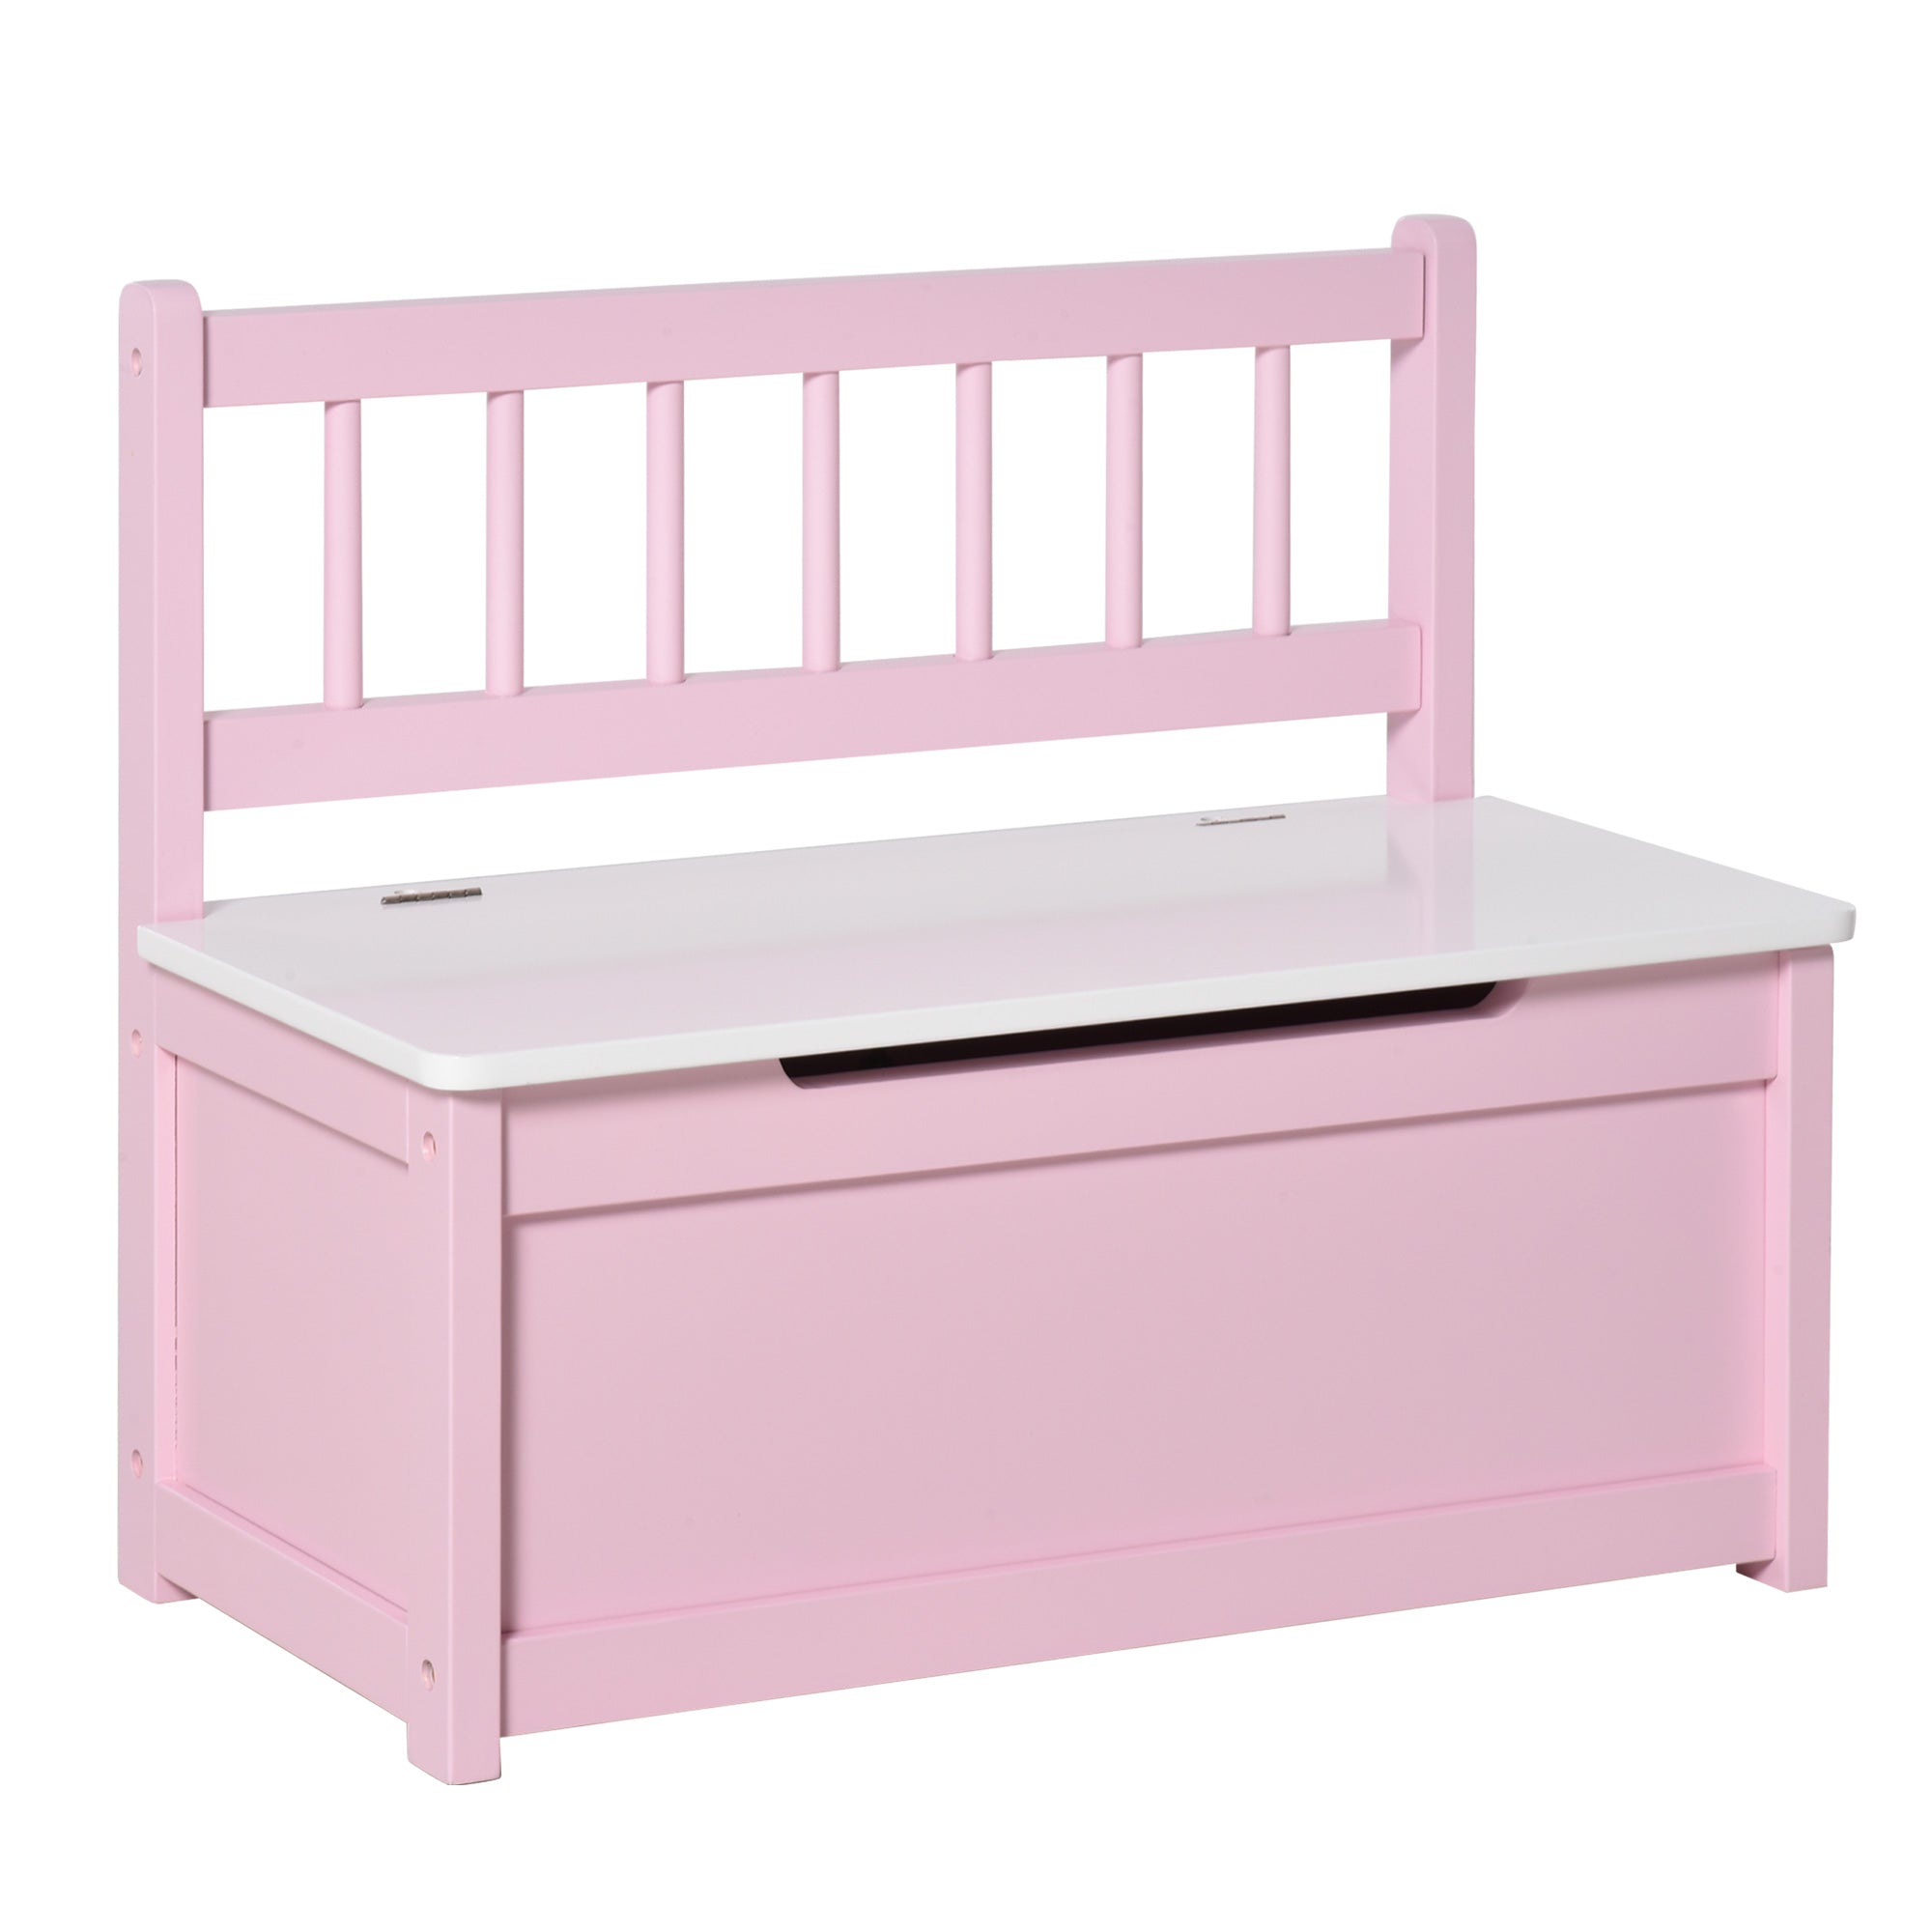 2-IN-1 Wooden Toy Box Kids Seat Bench Storage Chest Cabinet Organizer with Safety Pneumatic Rod 60 x 30 x 50cm Pink-0